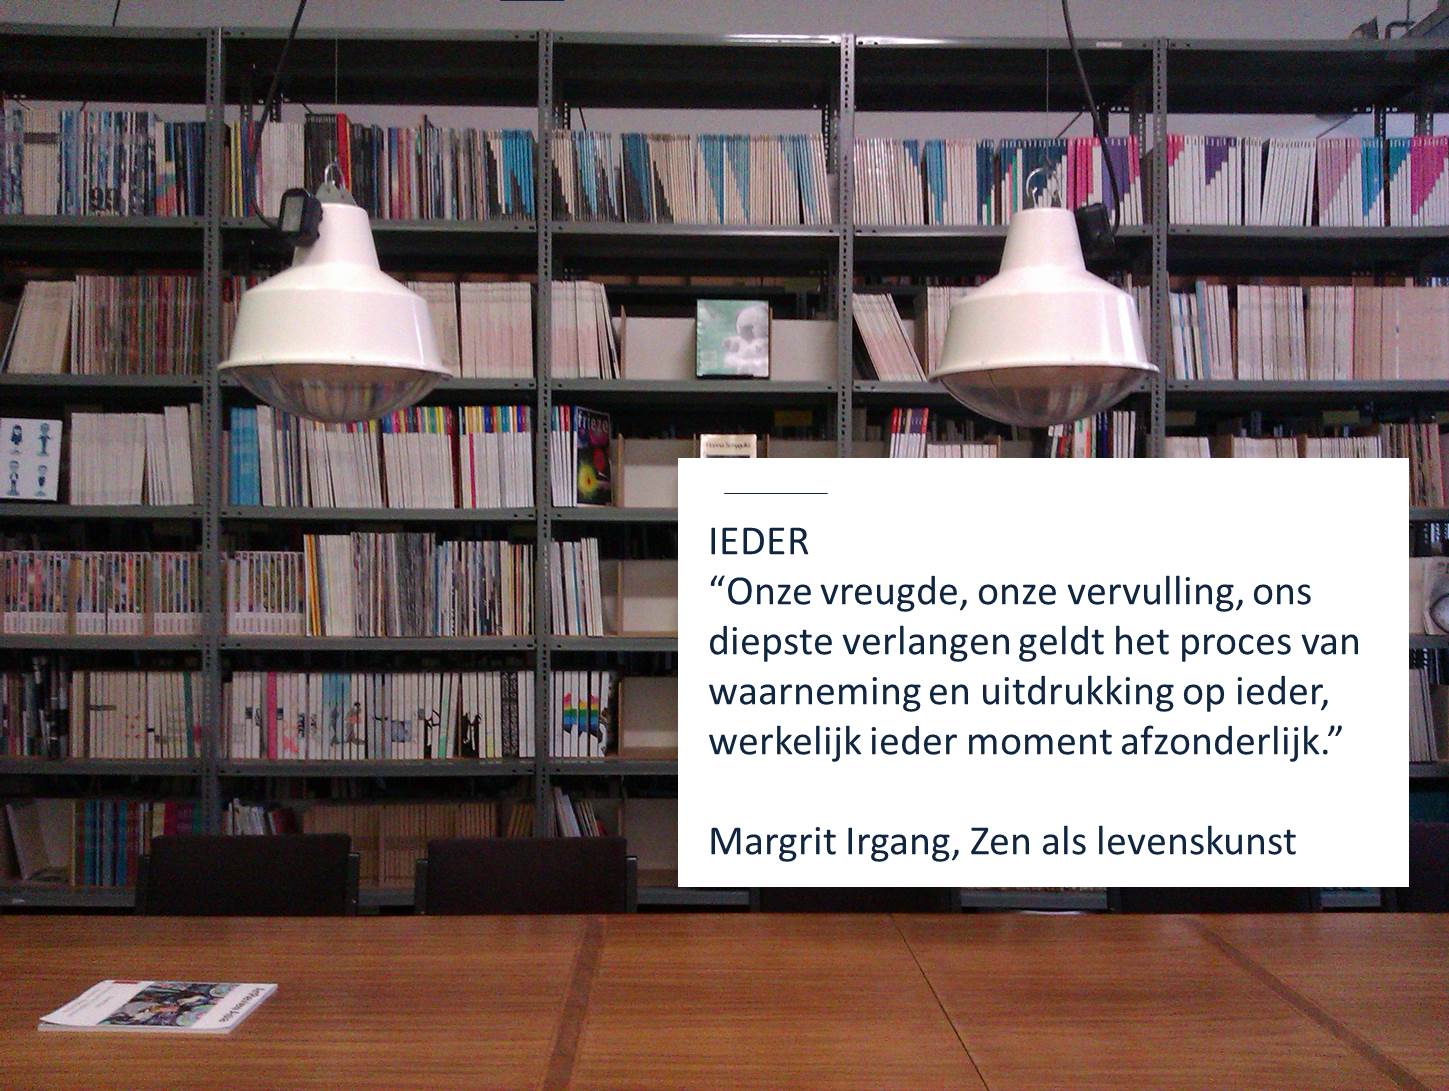 Werkgeluk, leerdoelen, voice dialogue, Rotterdam-Zuid, Margrit Irgang, Zen als levenskunst